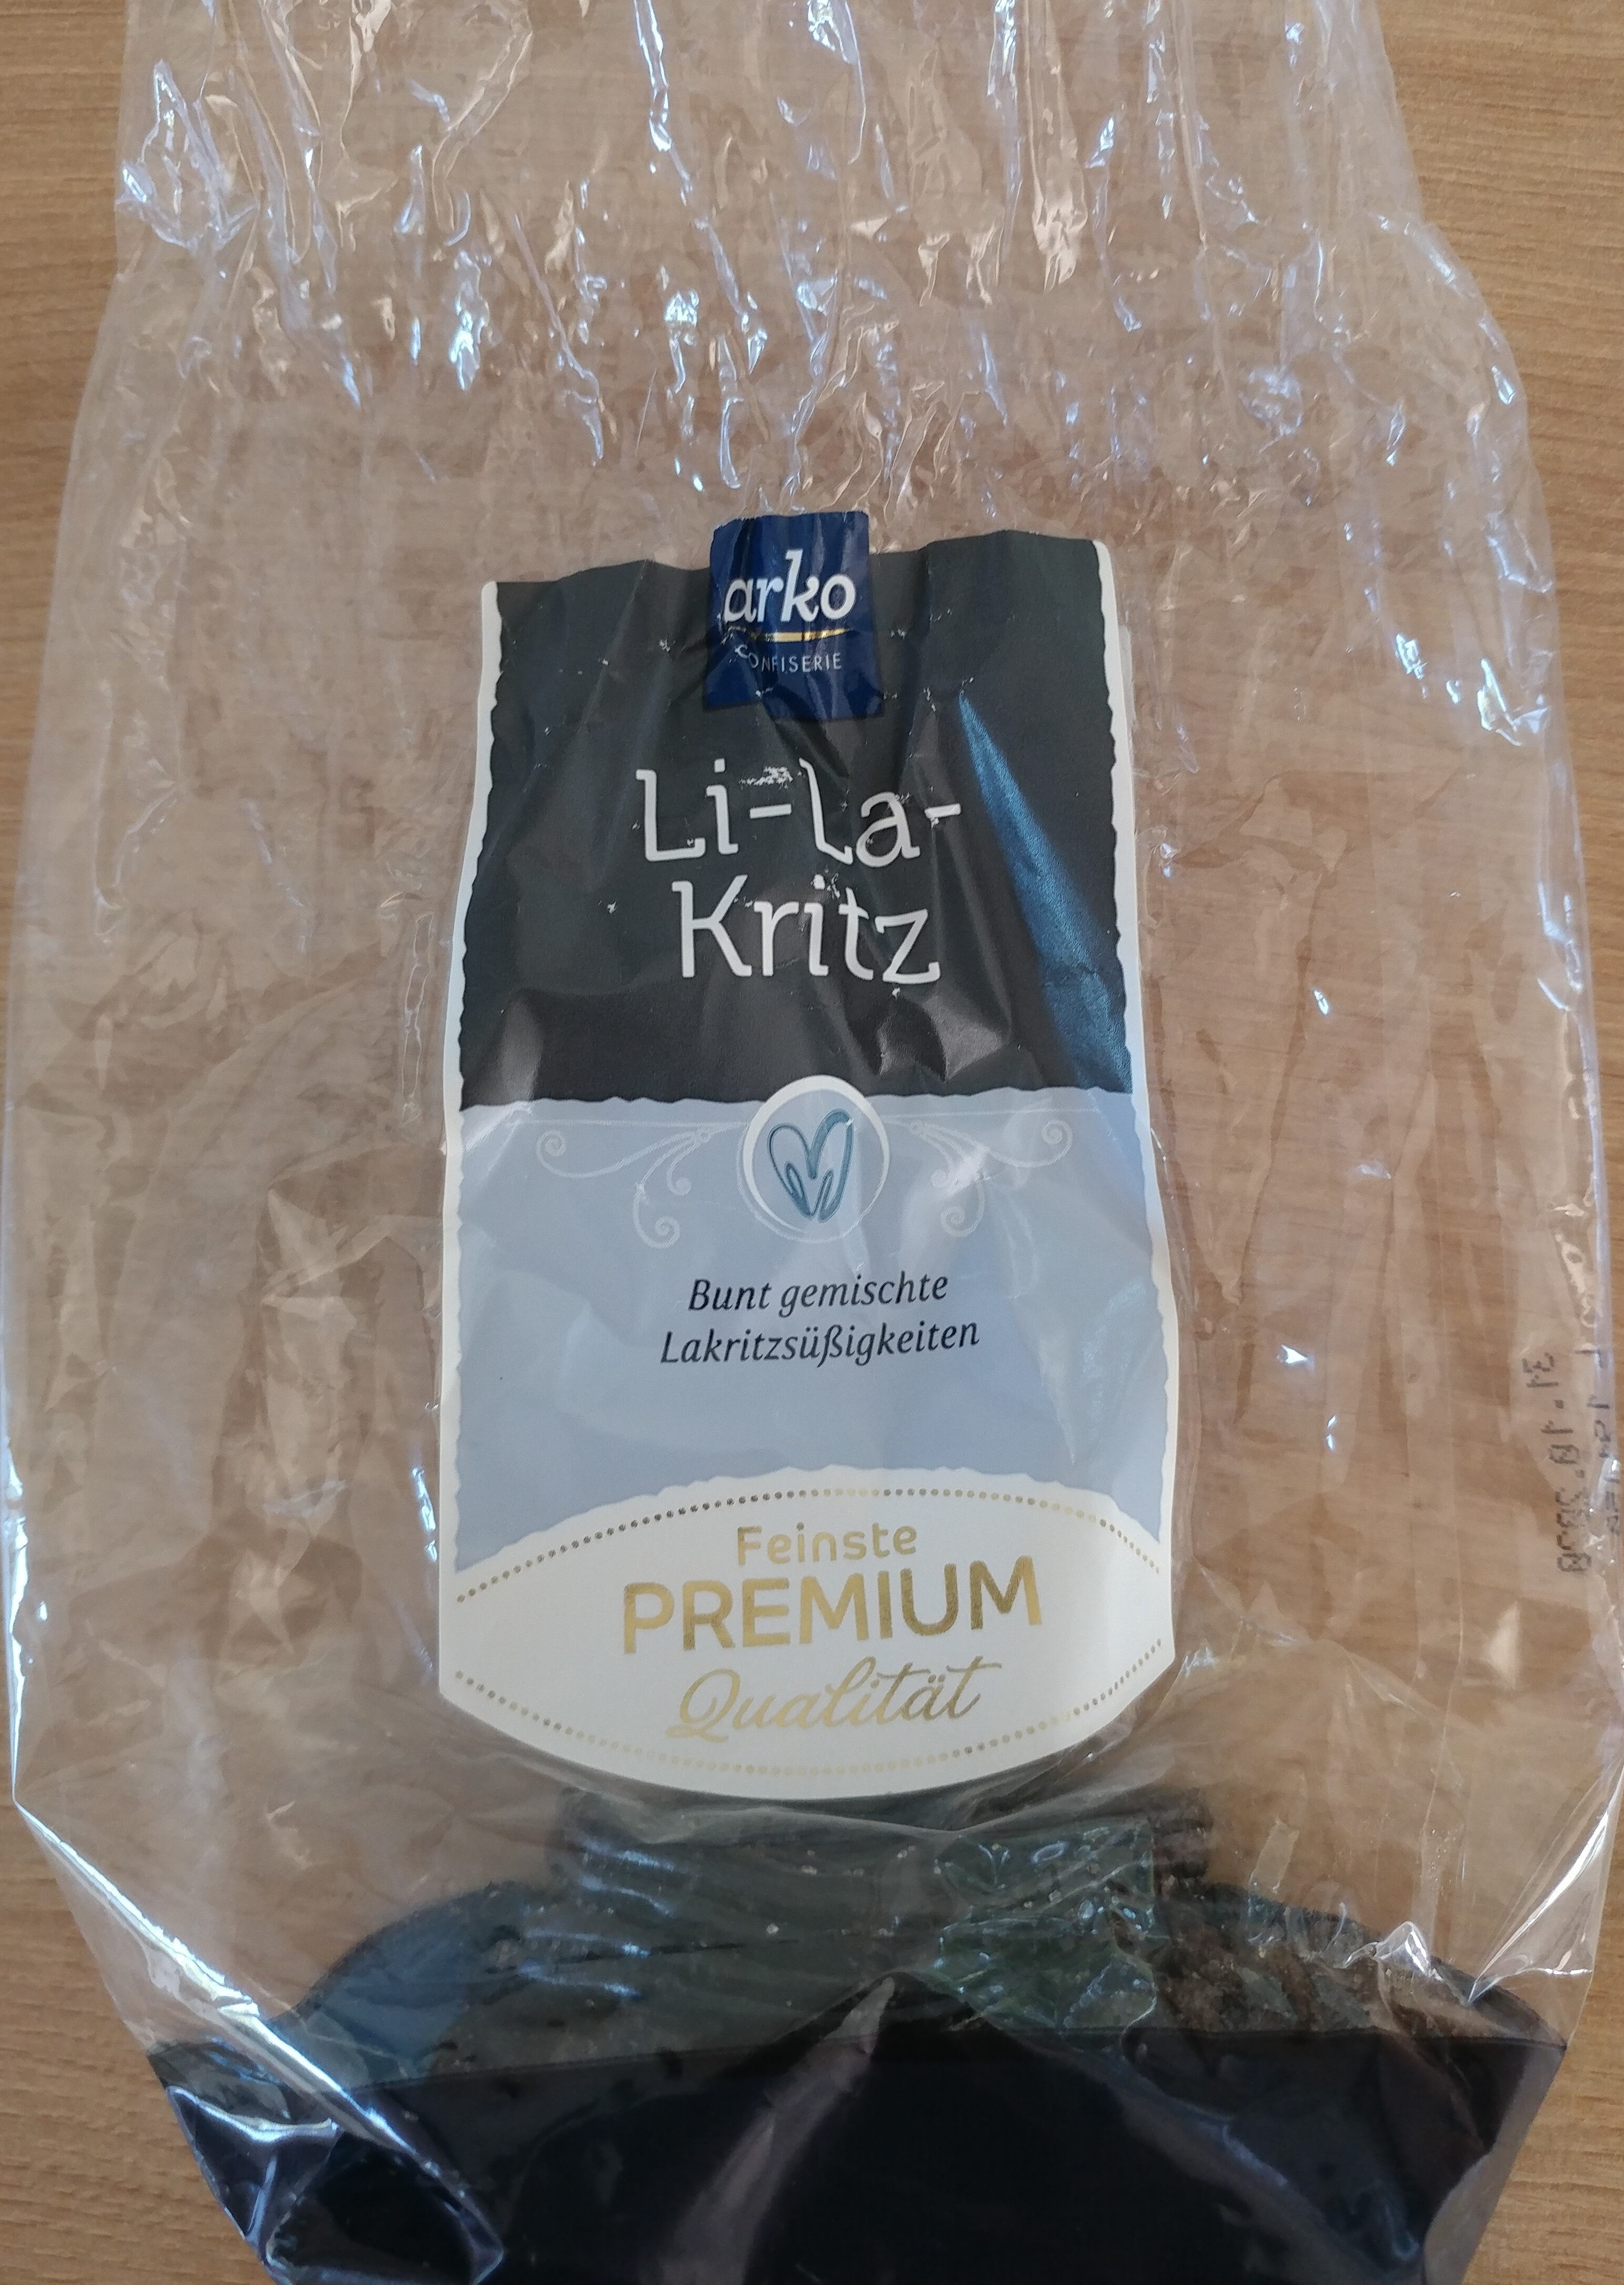 Li-La-Kritz - Product - de